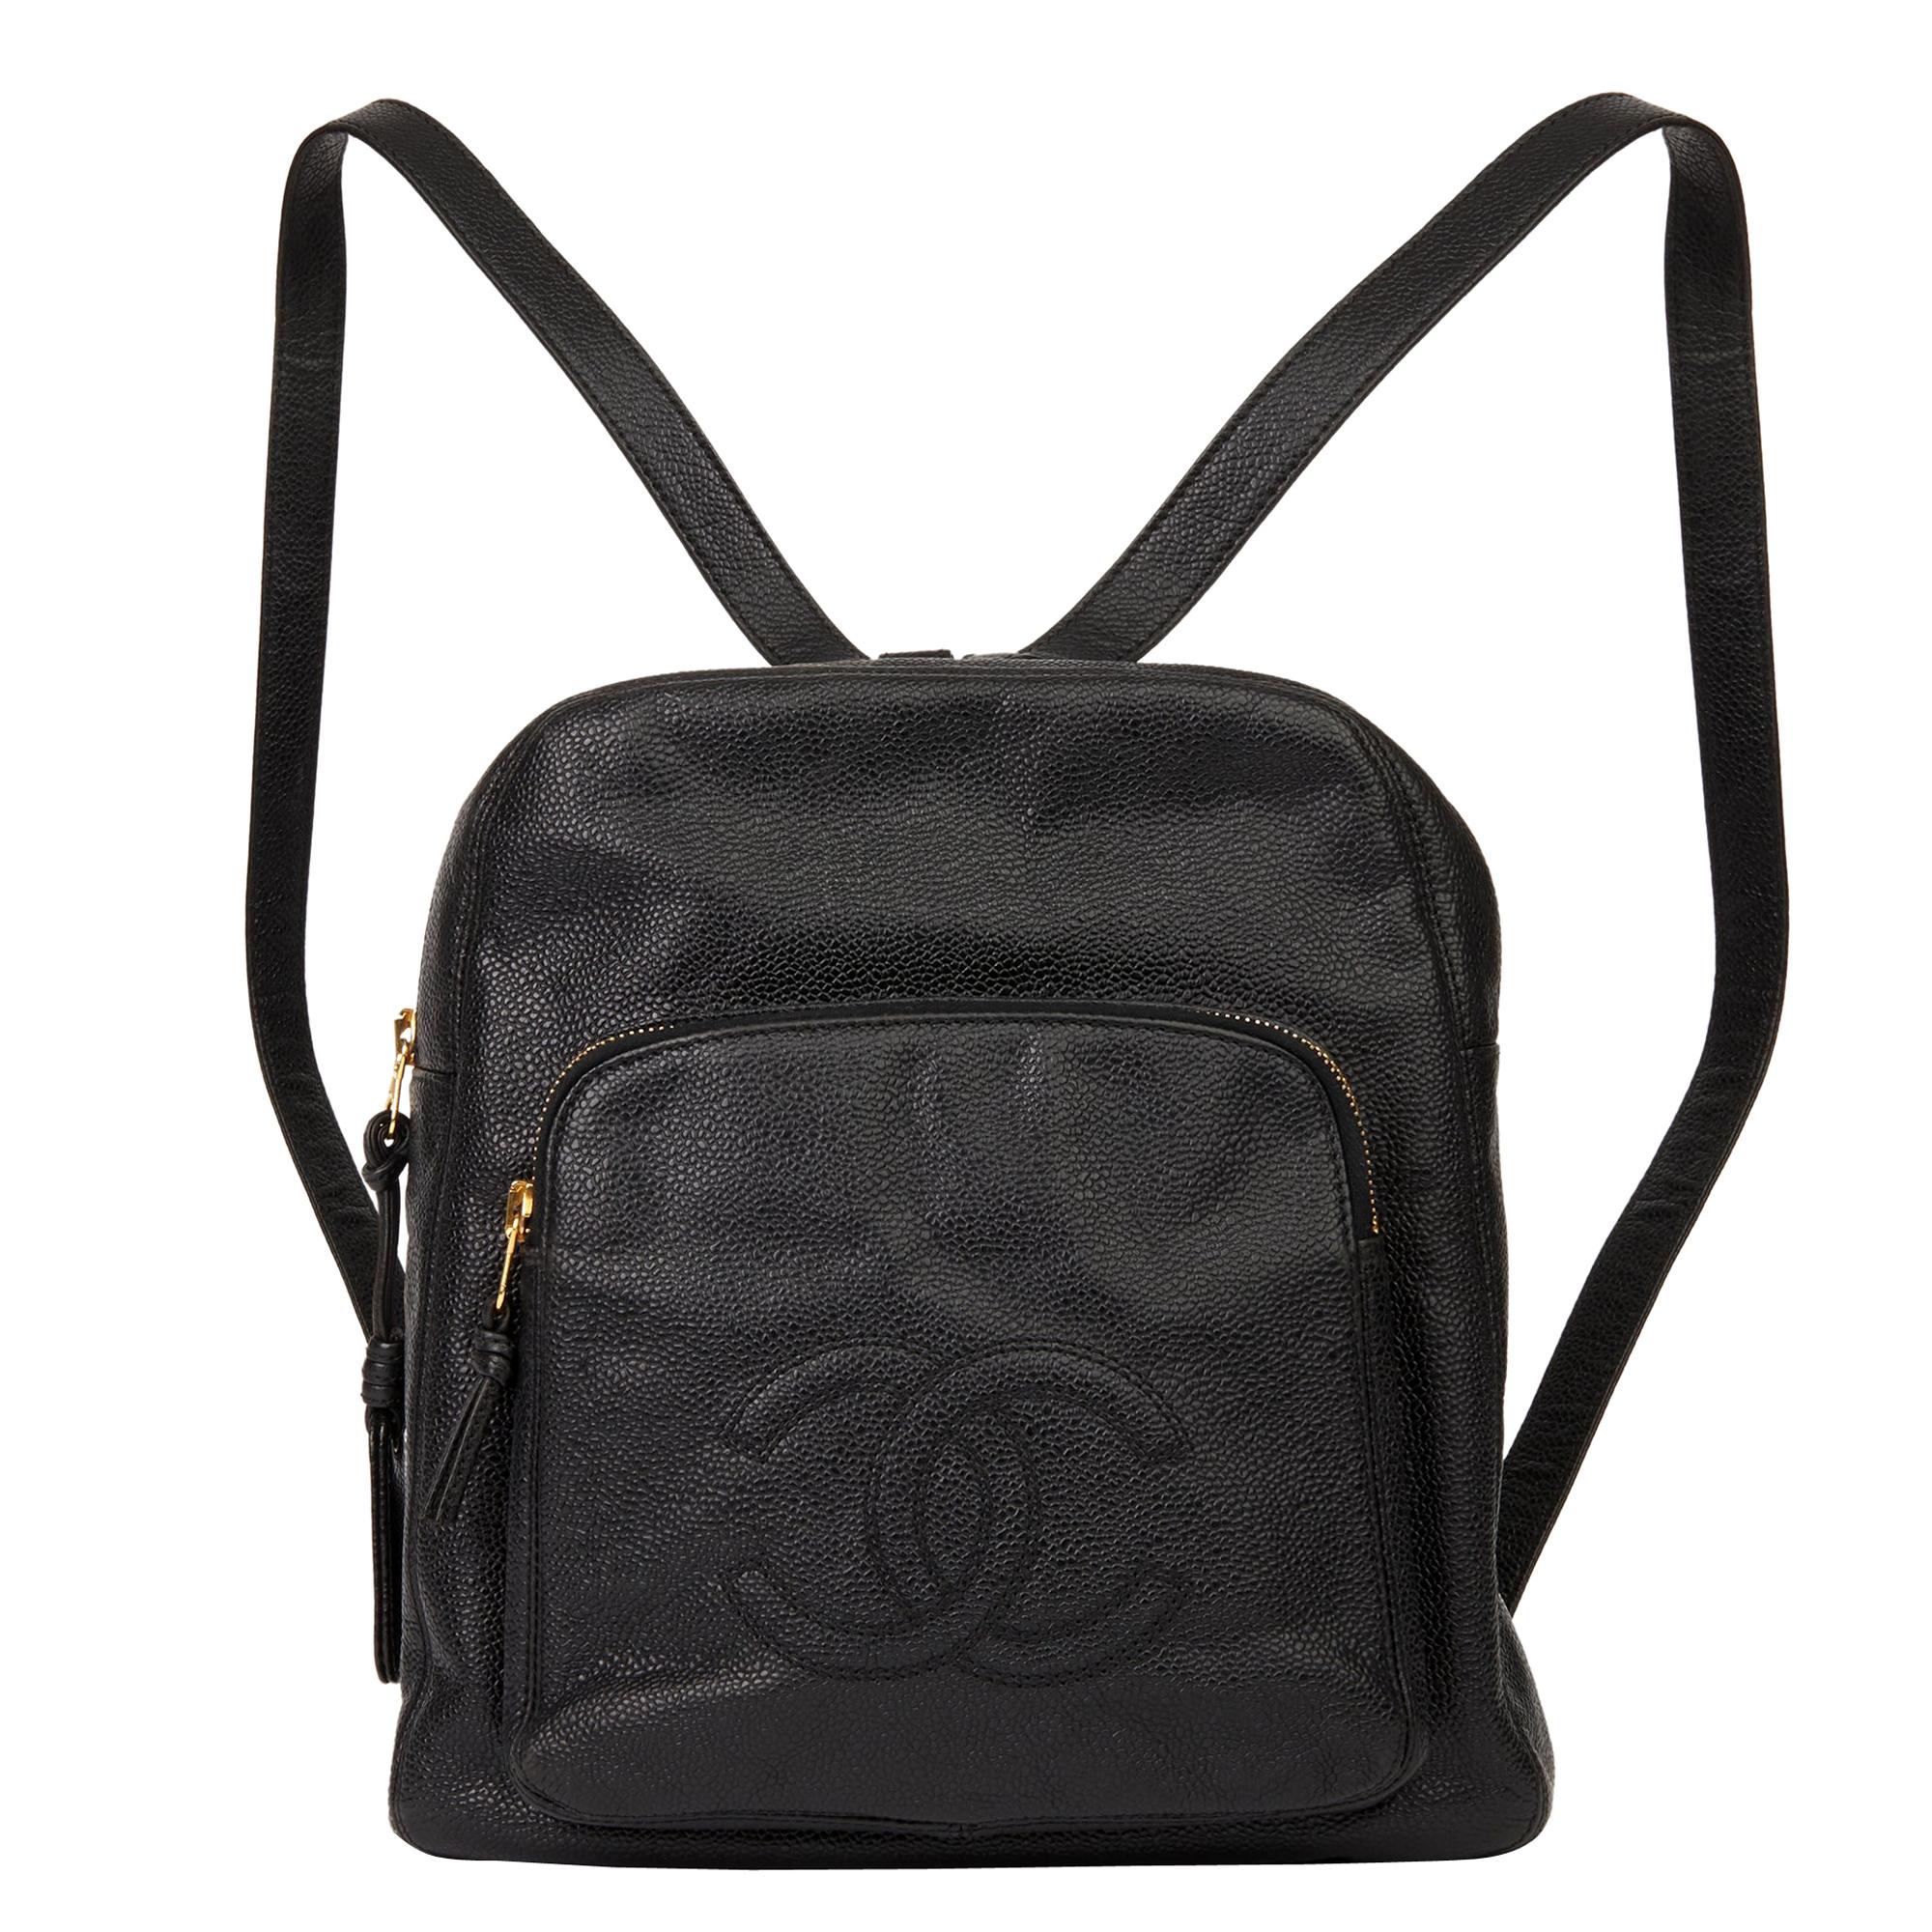 1996 Chanel Black Caviar Leather Vintage Timeless Backpack